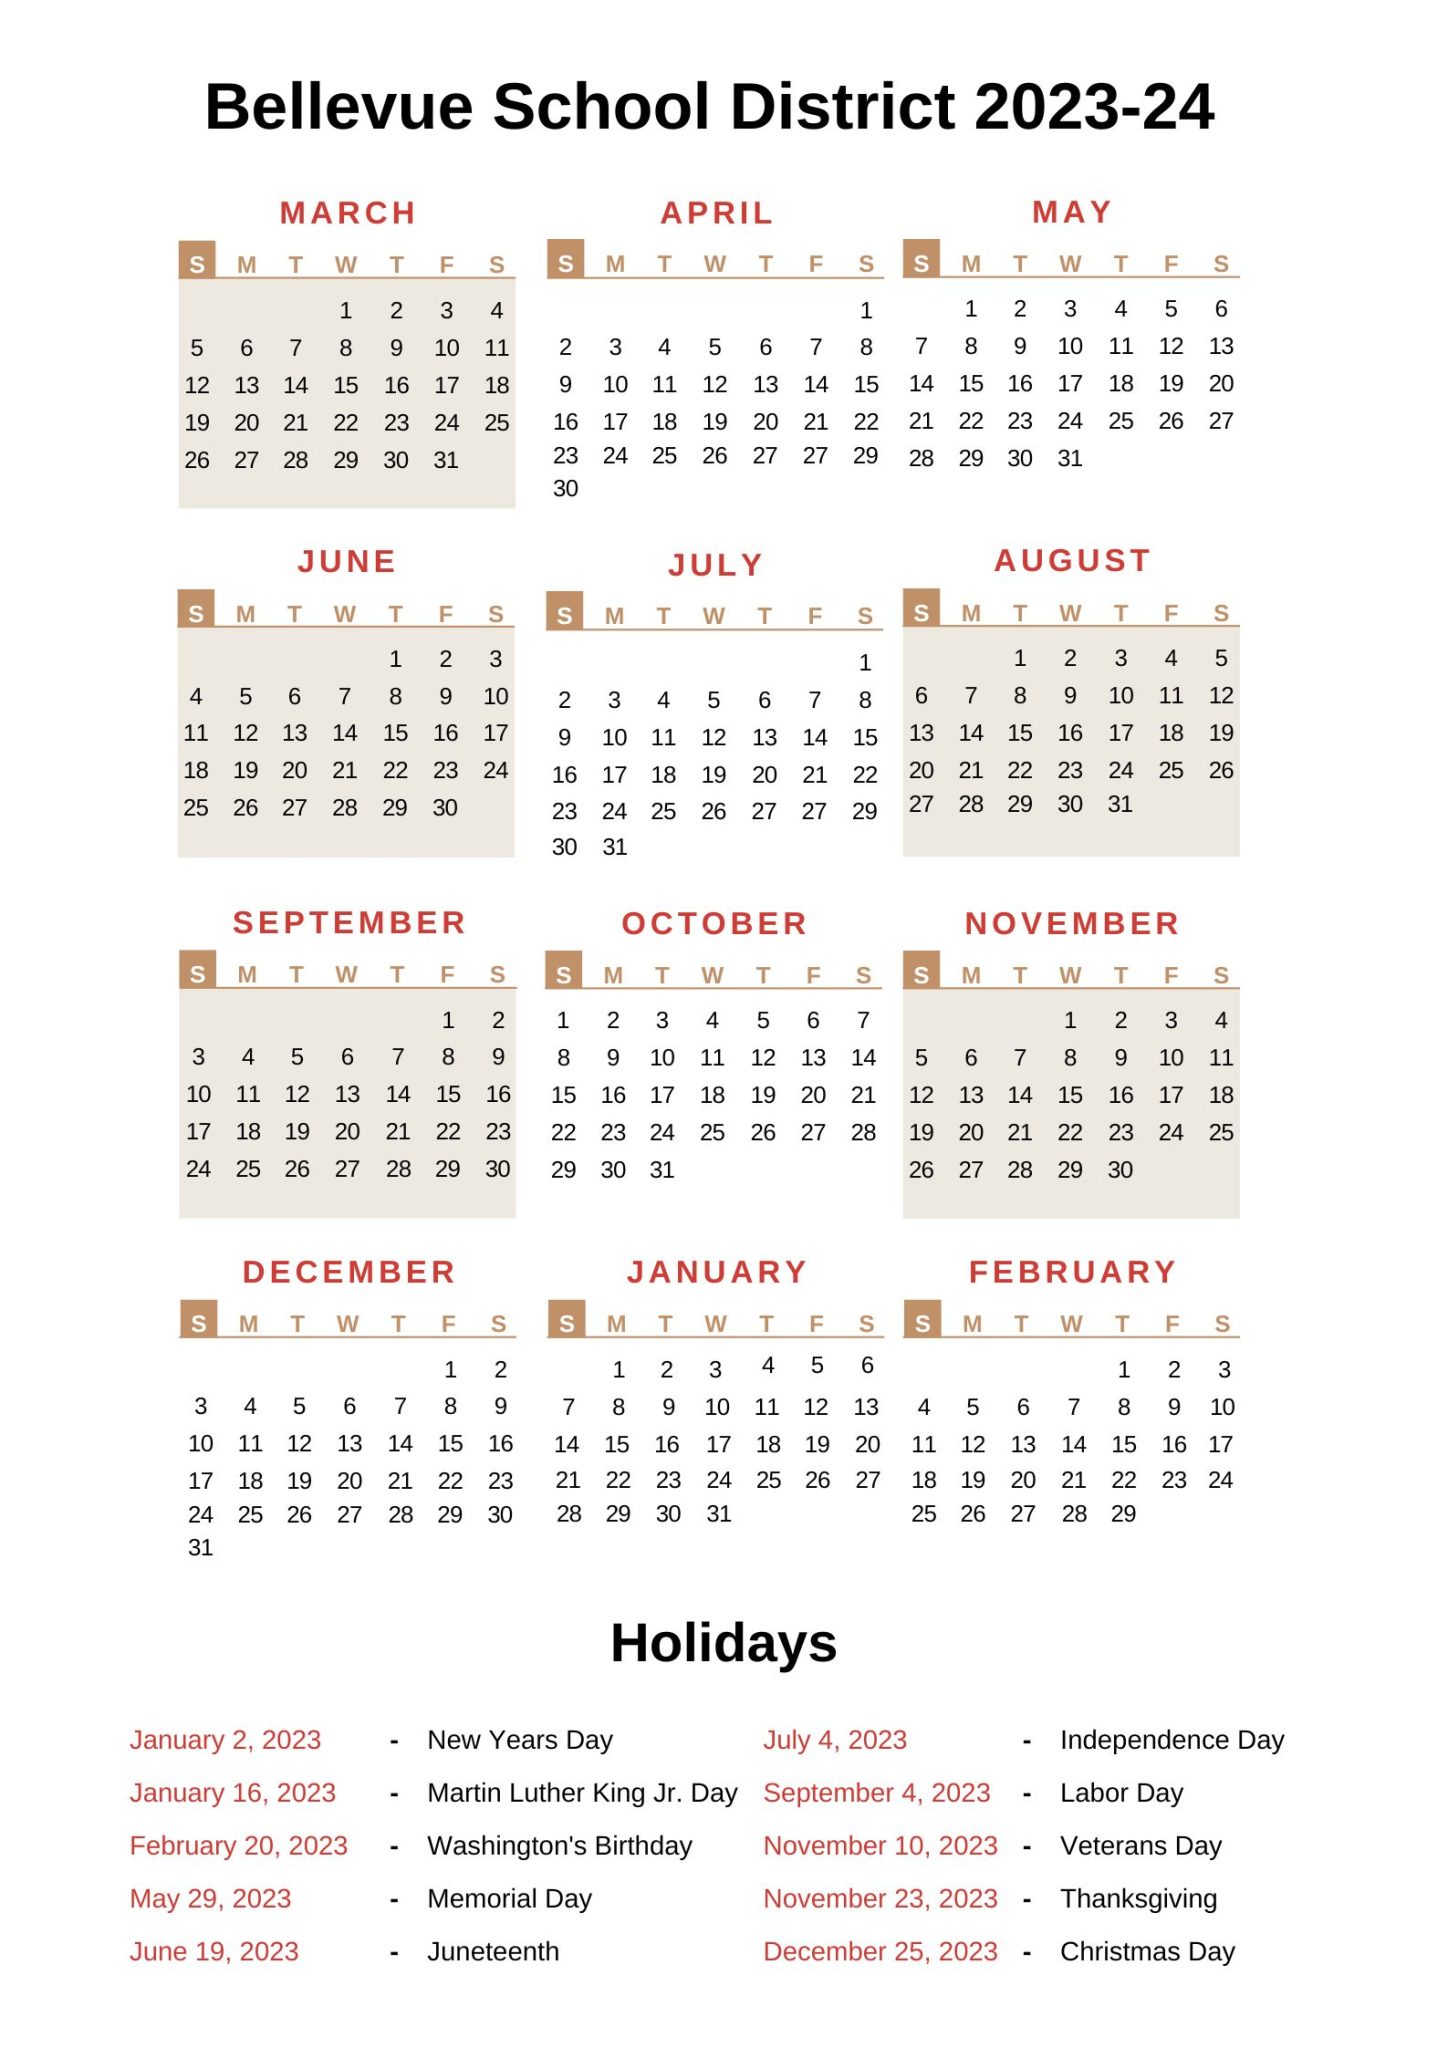 bellevue-school-district-calendar-2023-2024-holiday-breaks